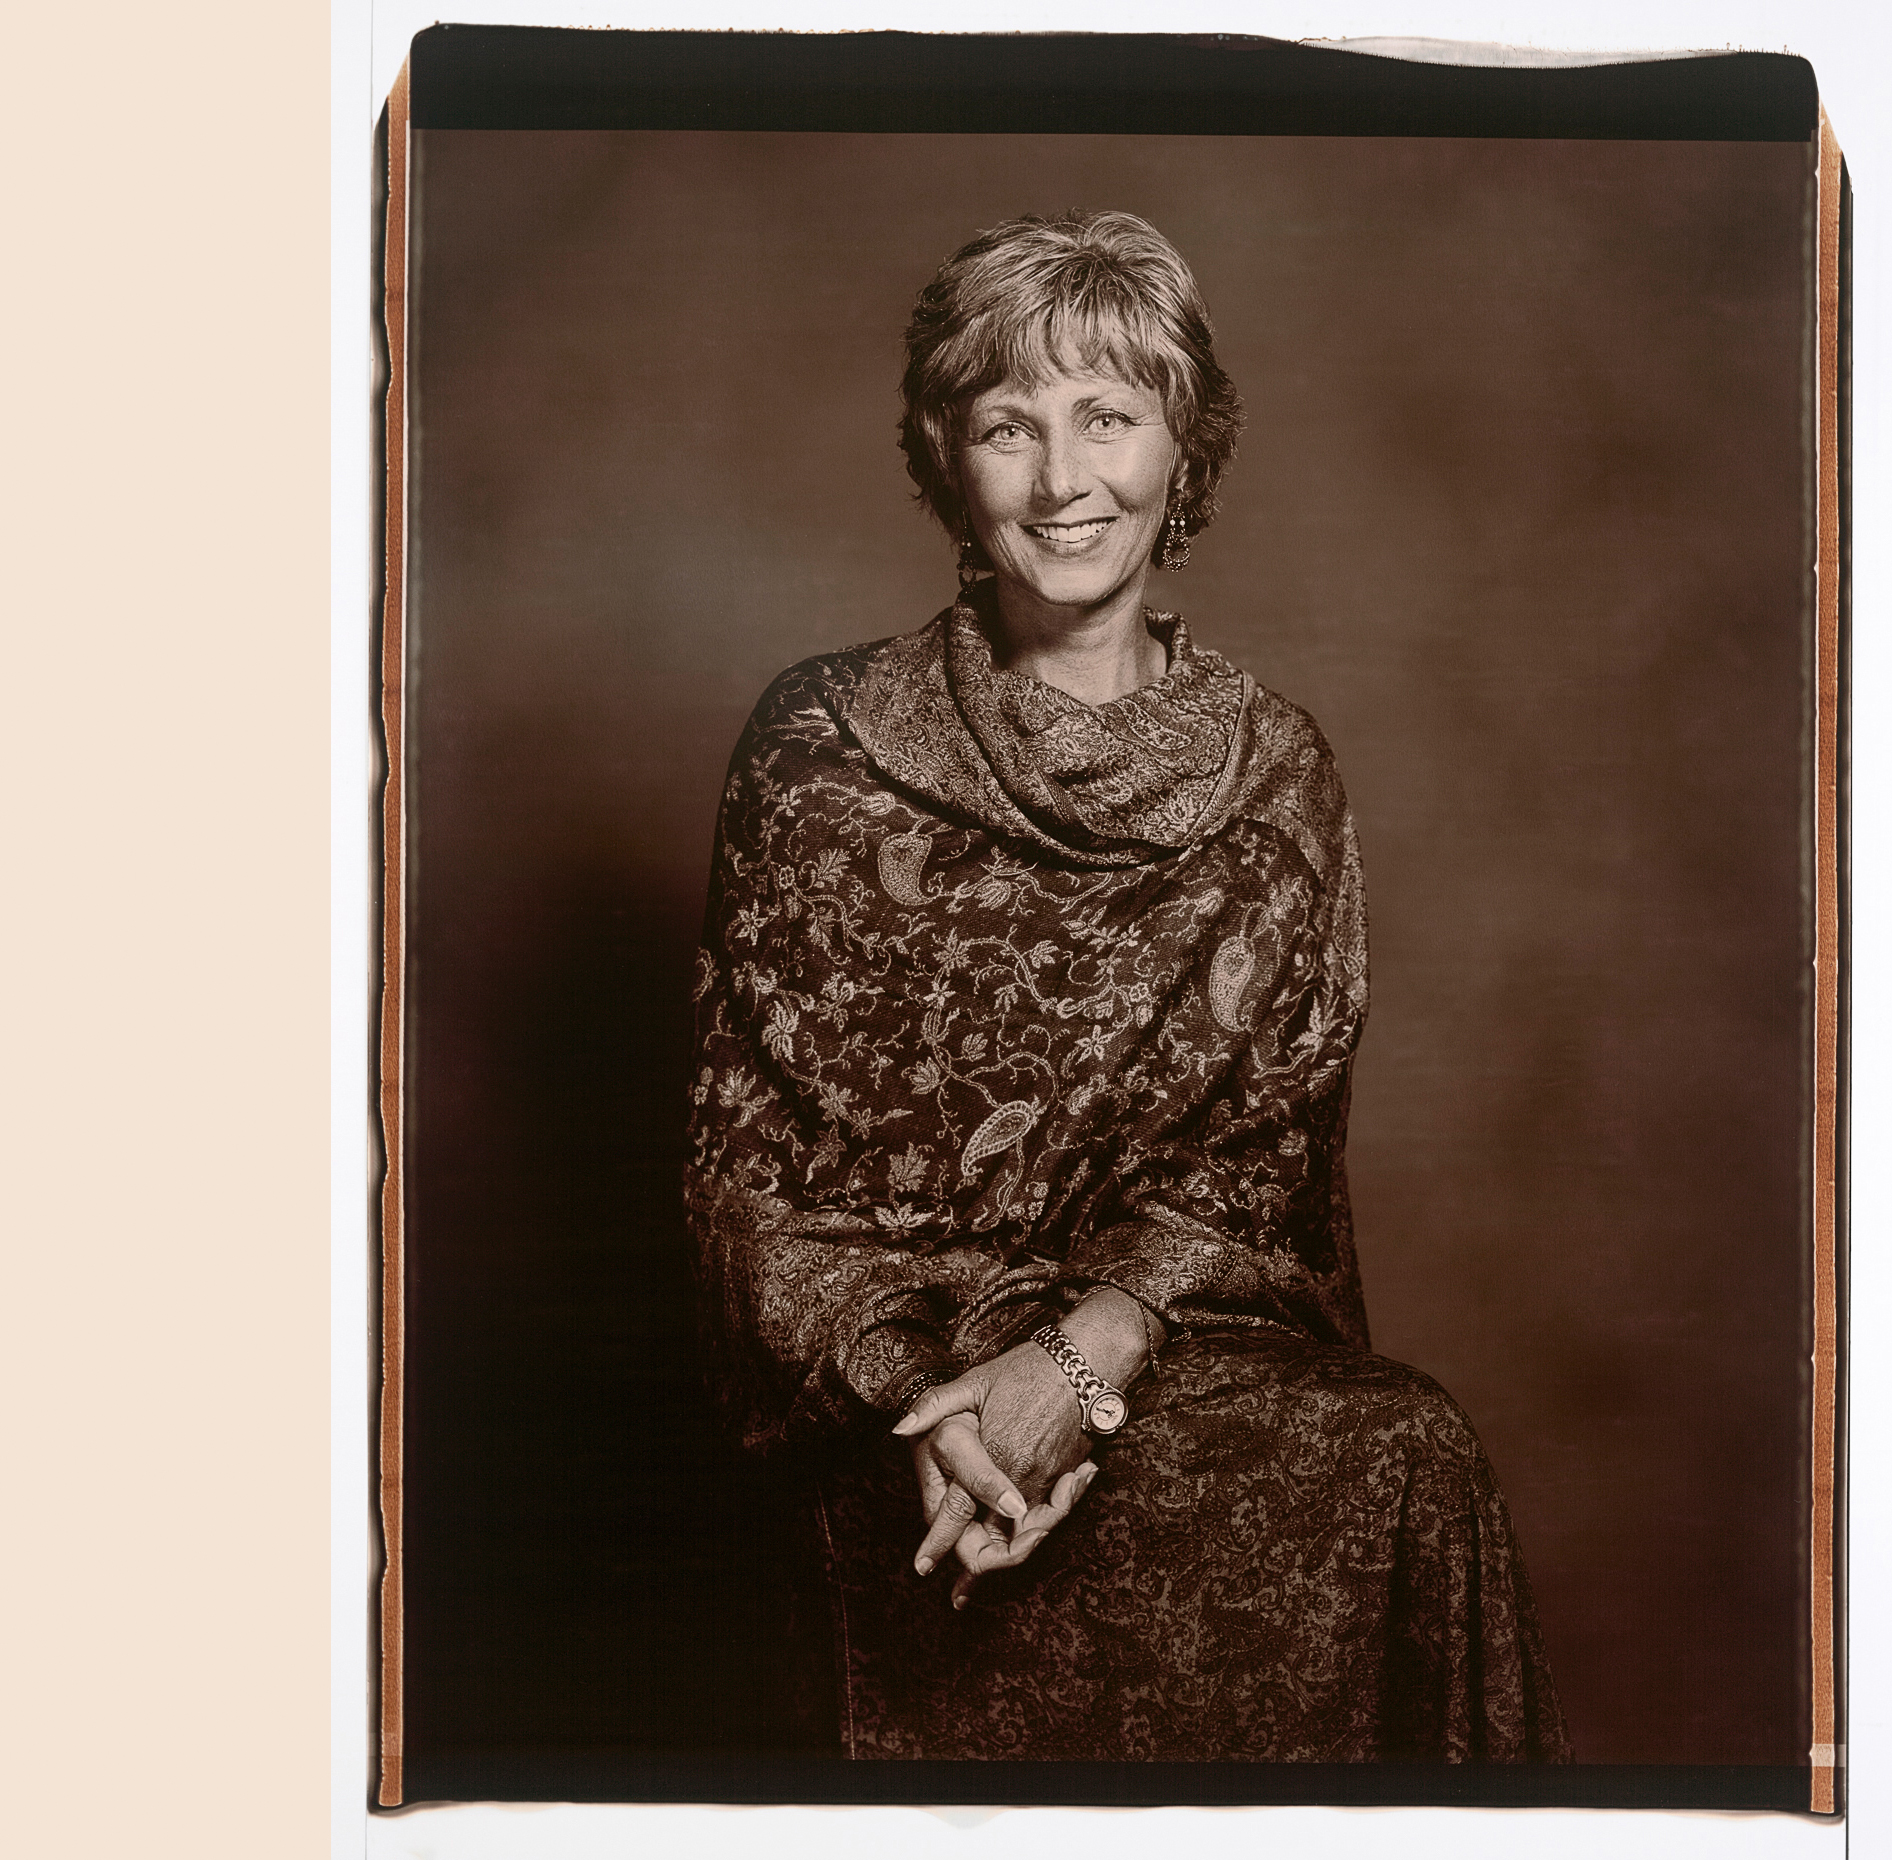 20x24" Black & White Polaroid portrait of lone woman